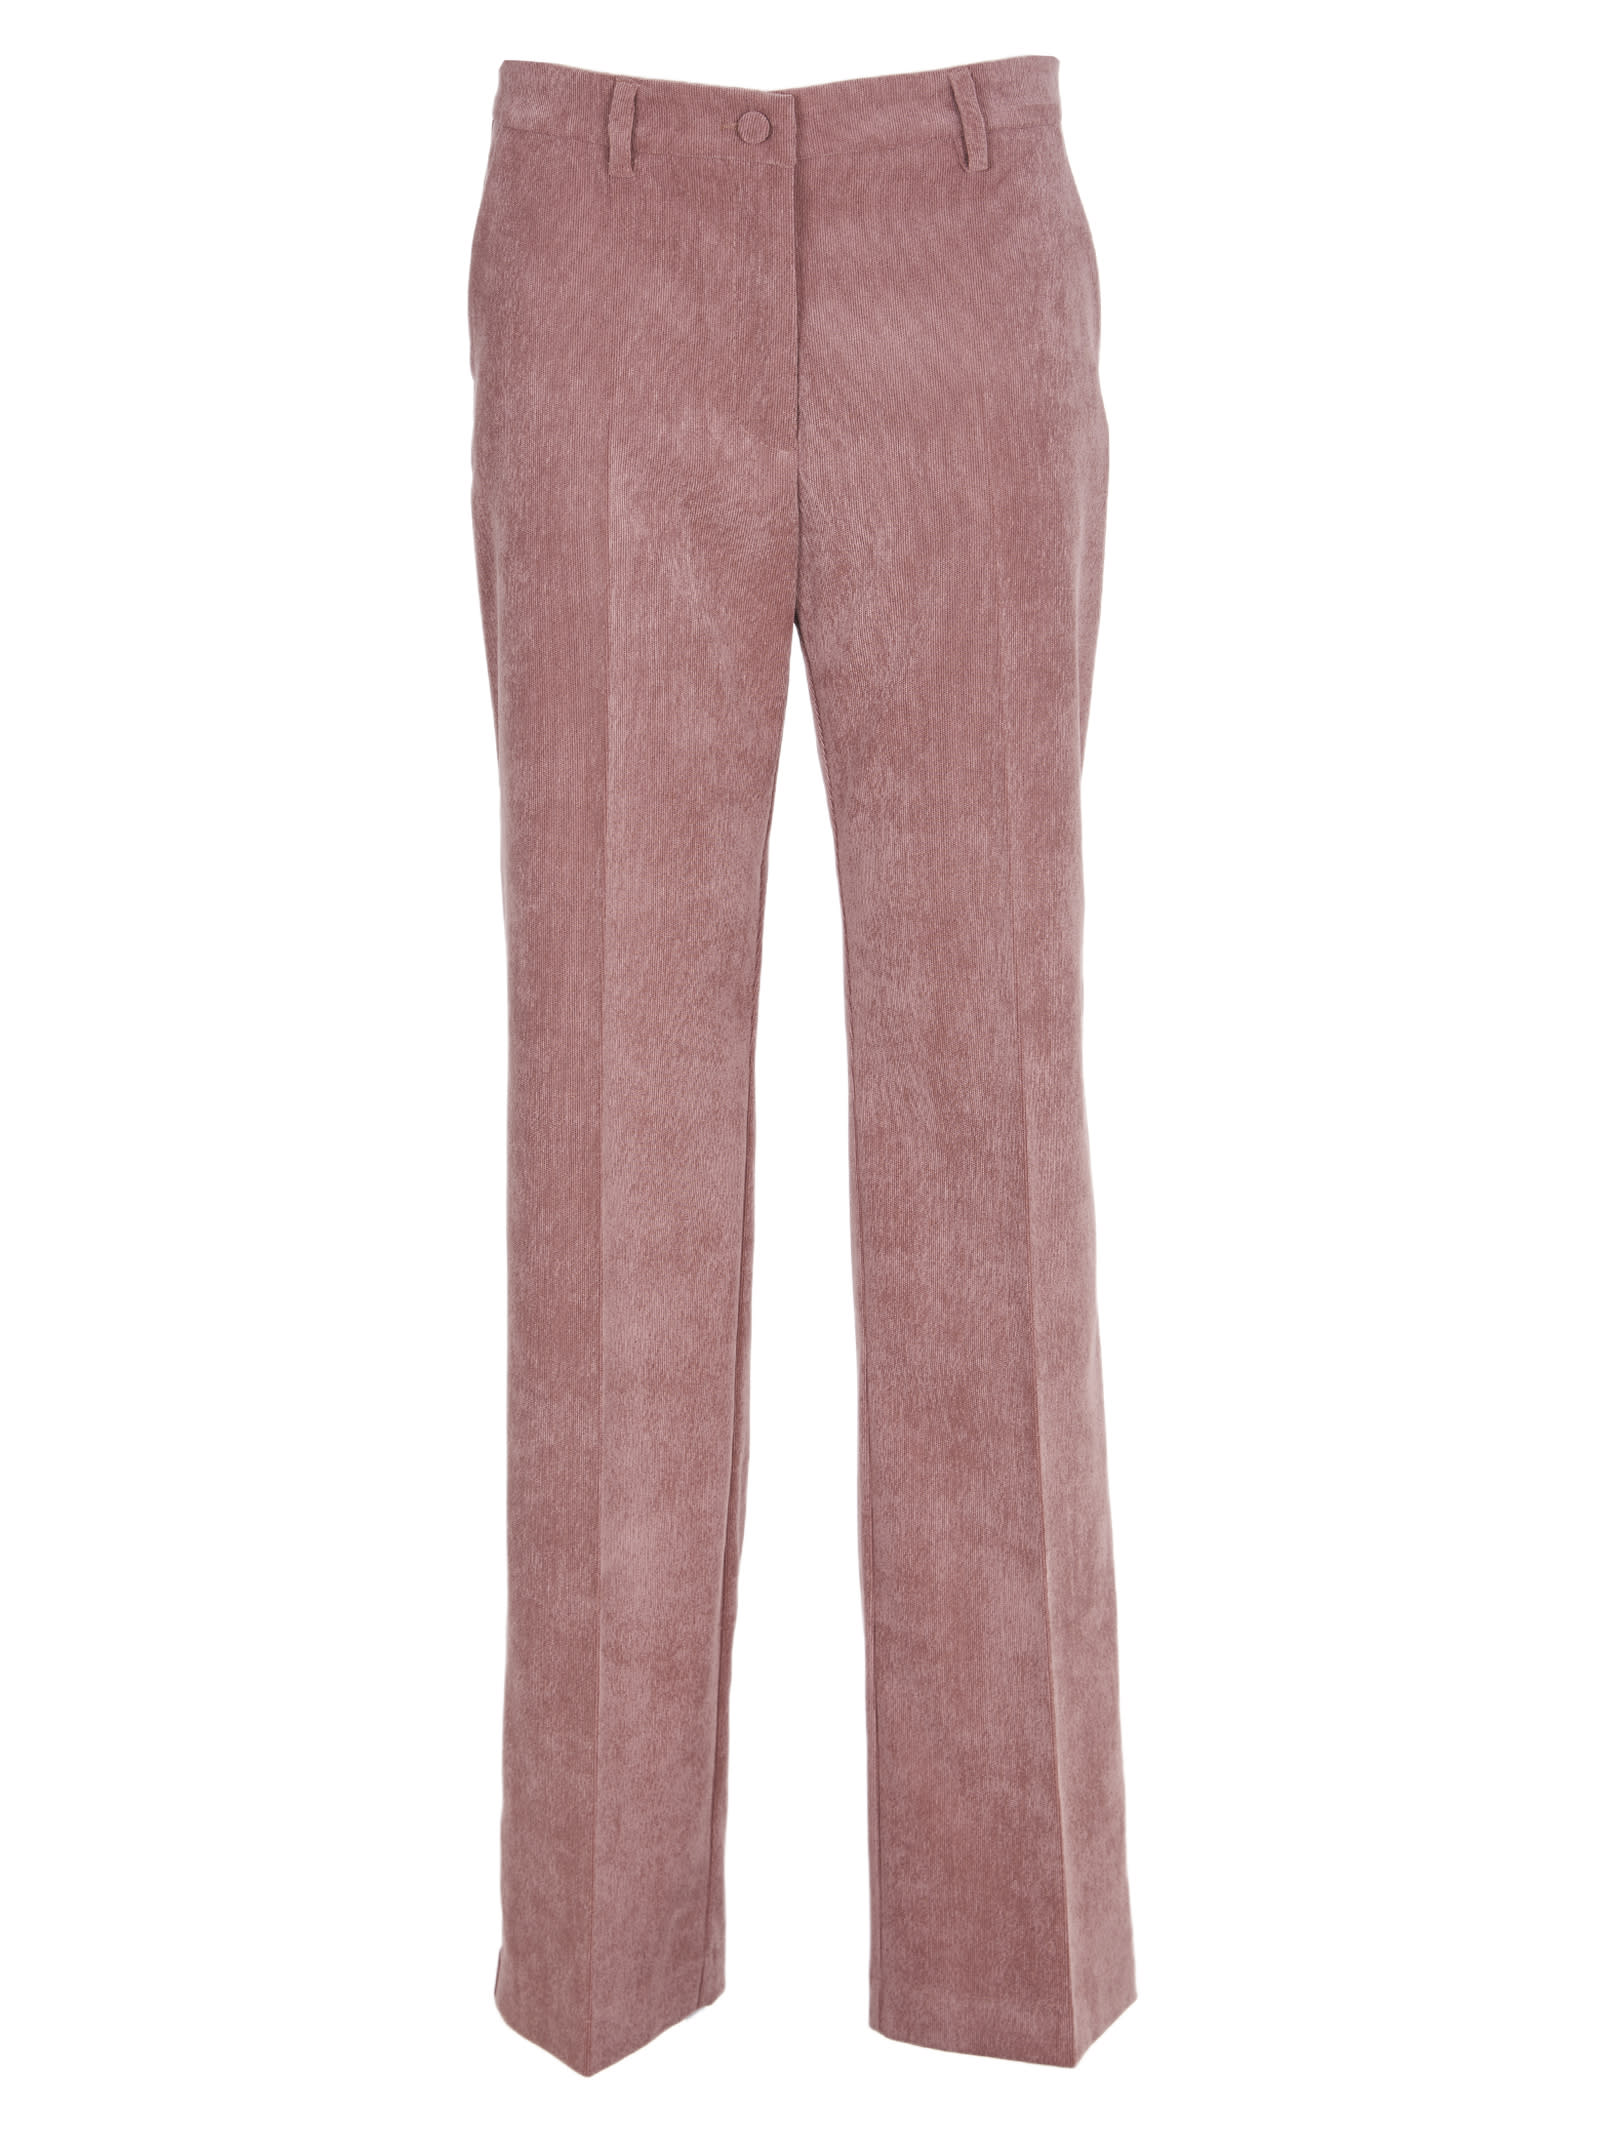 Hebe Studio Pink Cordury Trousers